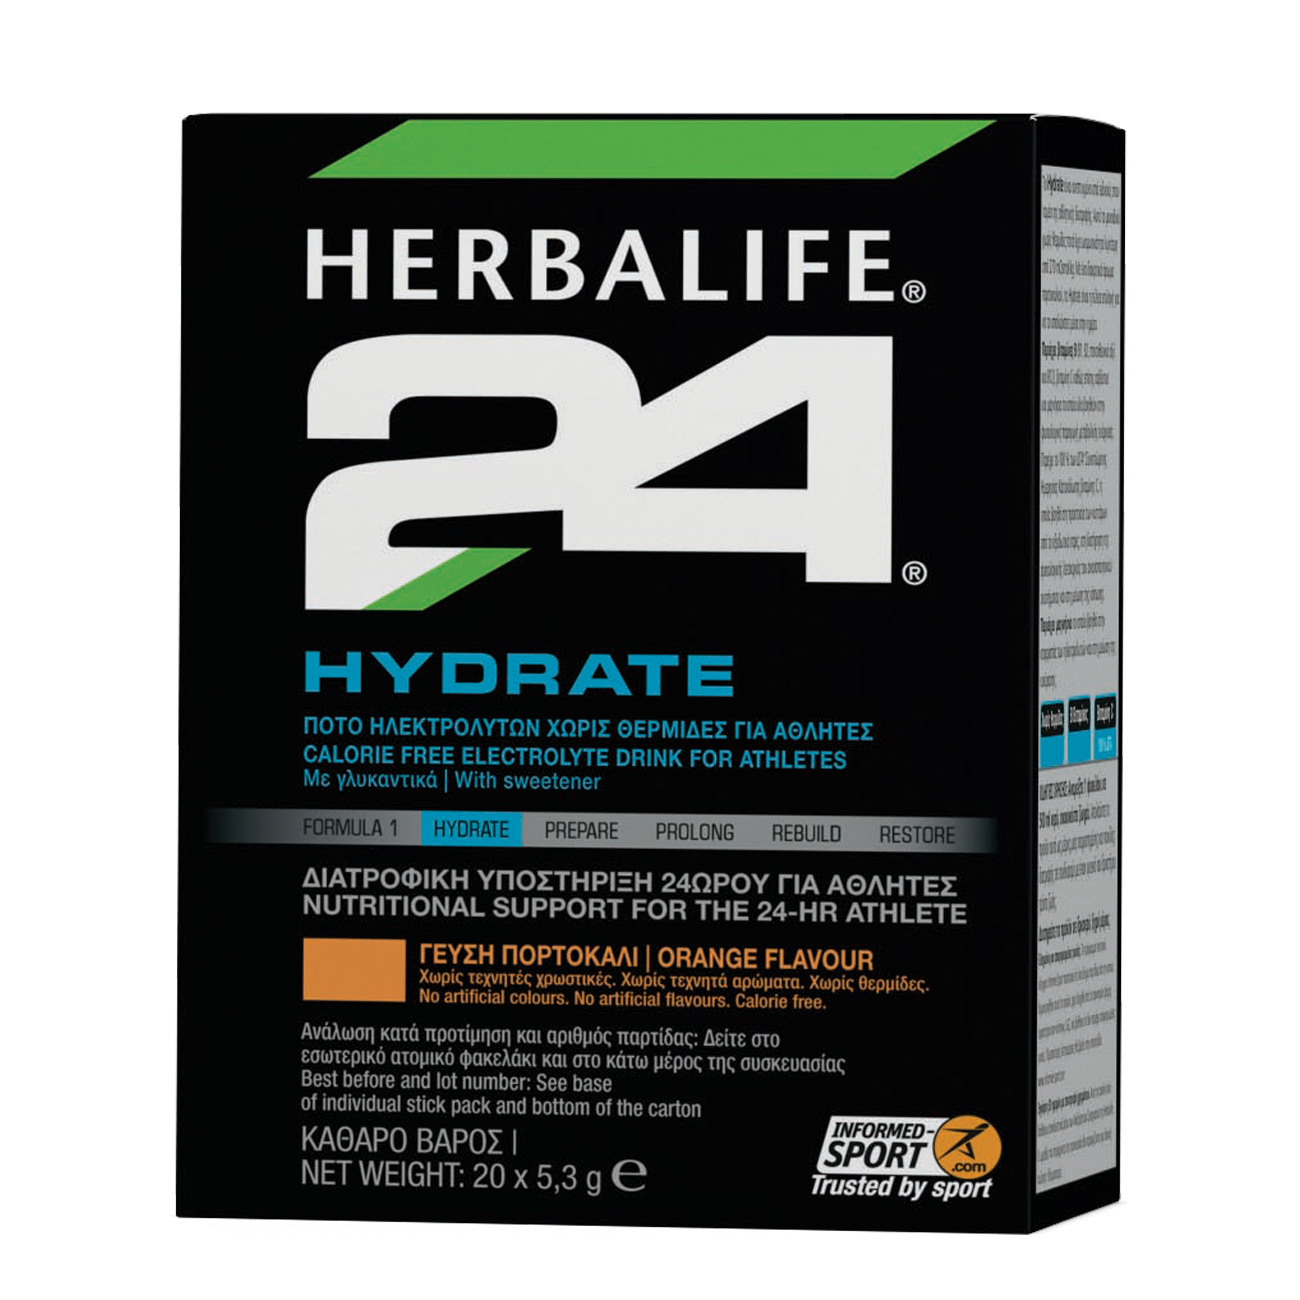 Herbalife24® Hydrate Ποτό Ηλεκτρολυτών με Γεύση Πορτοκάλι product shot